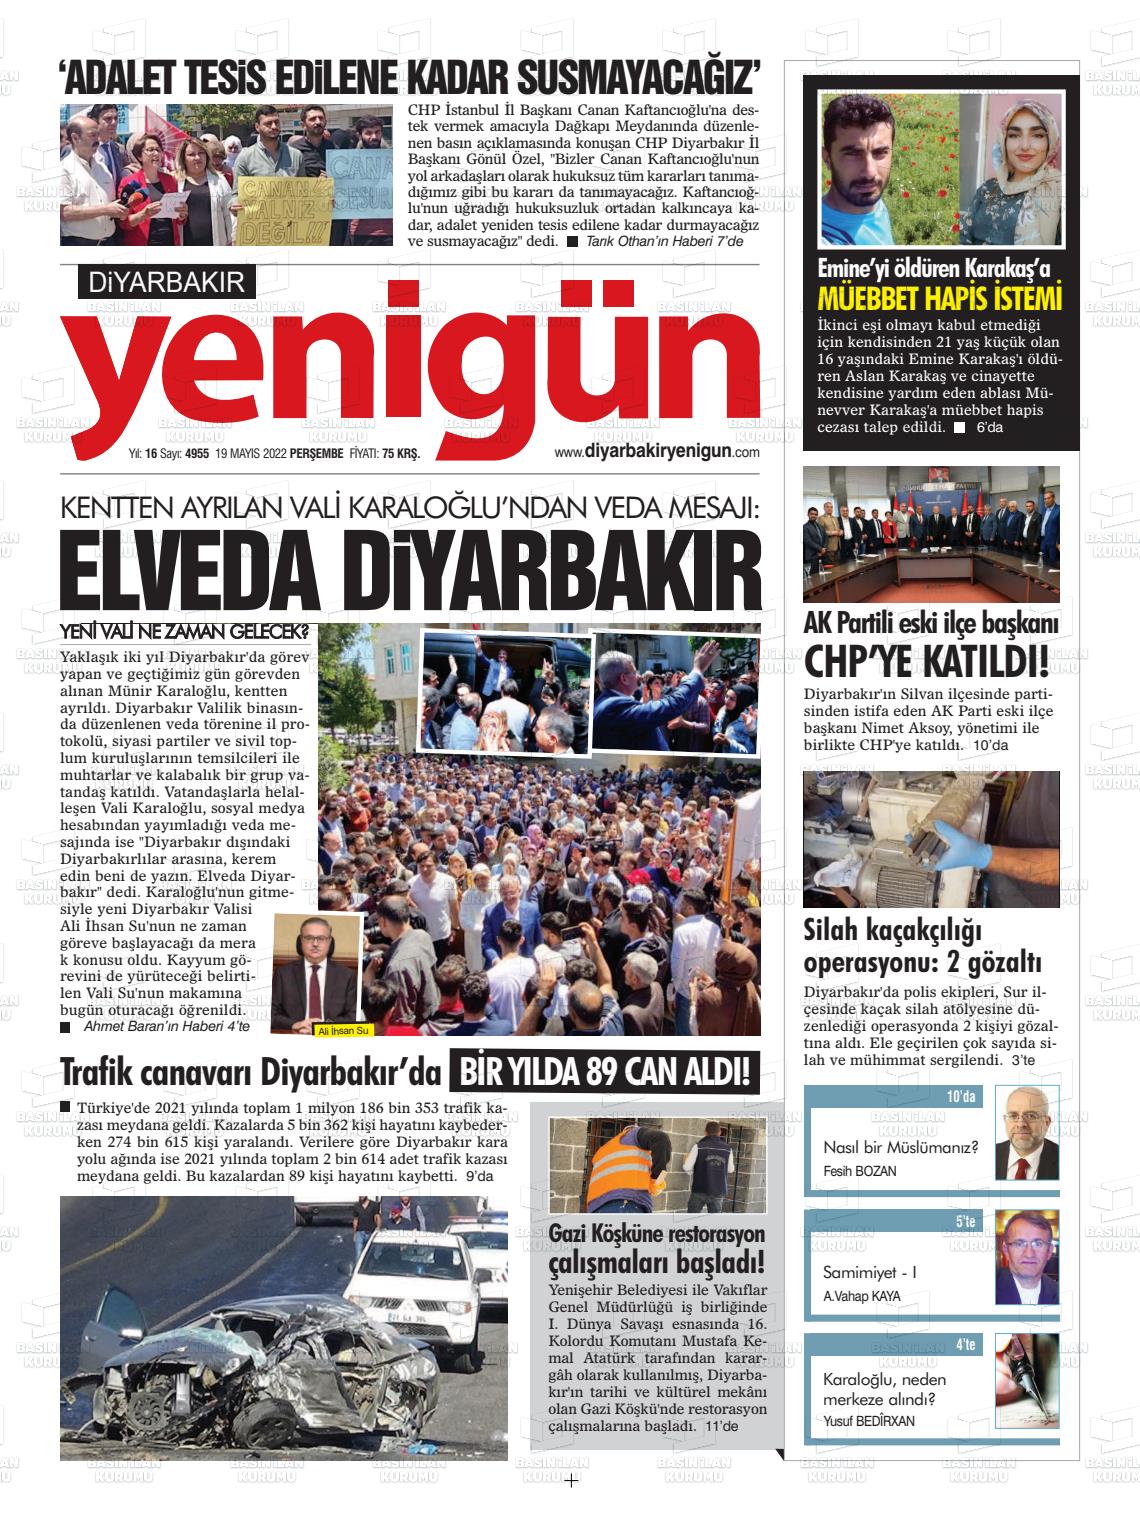 19 Mayıs 2022 Diyarbakır Yenigün Gazete Manşeti